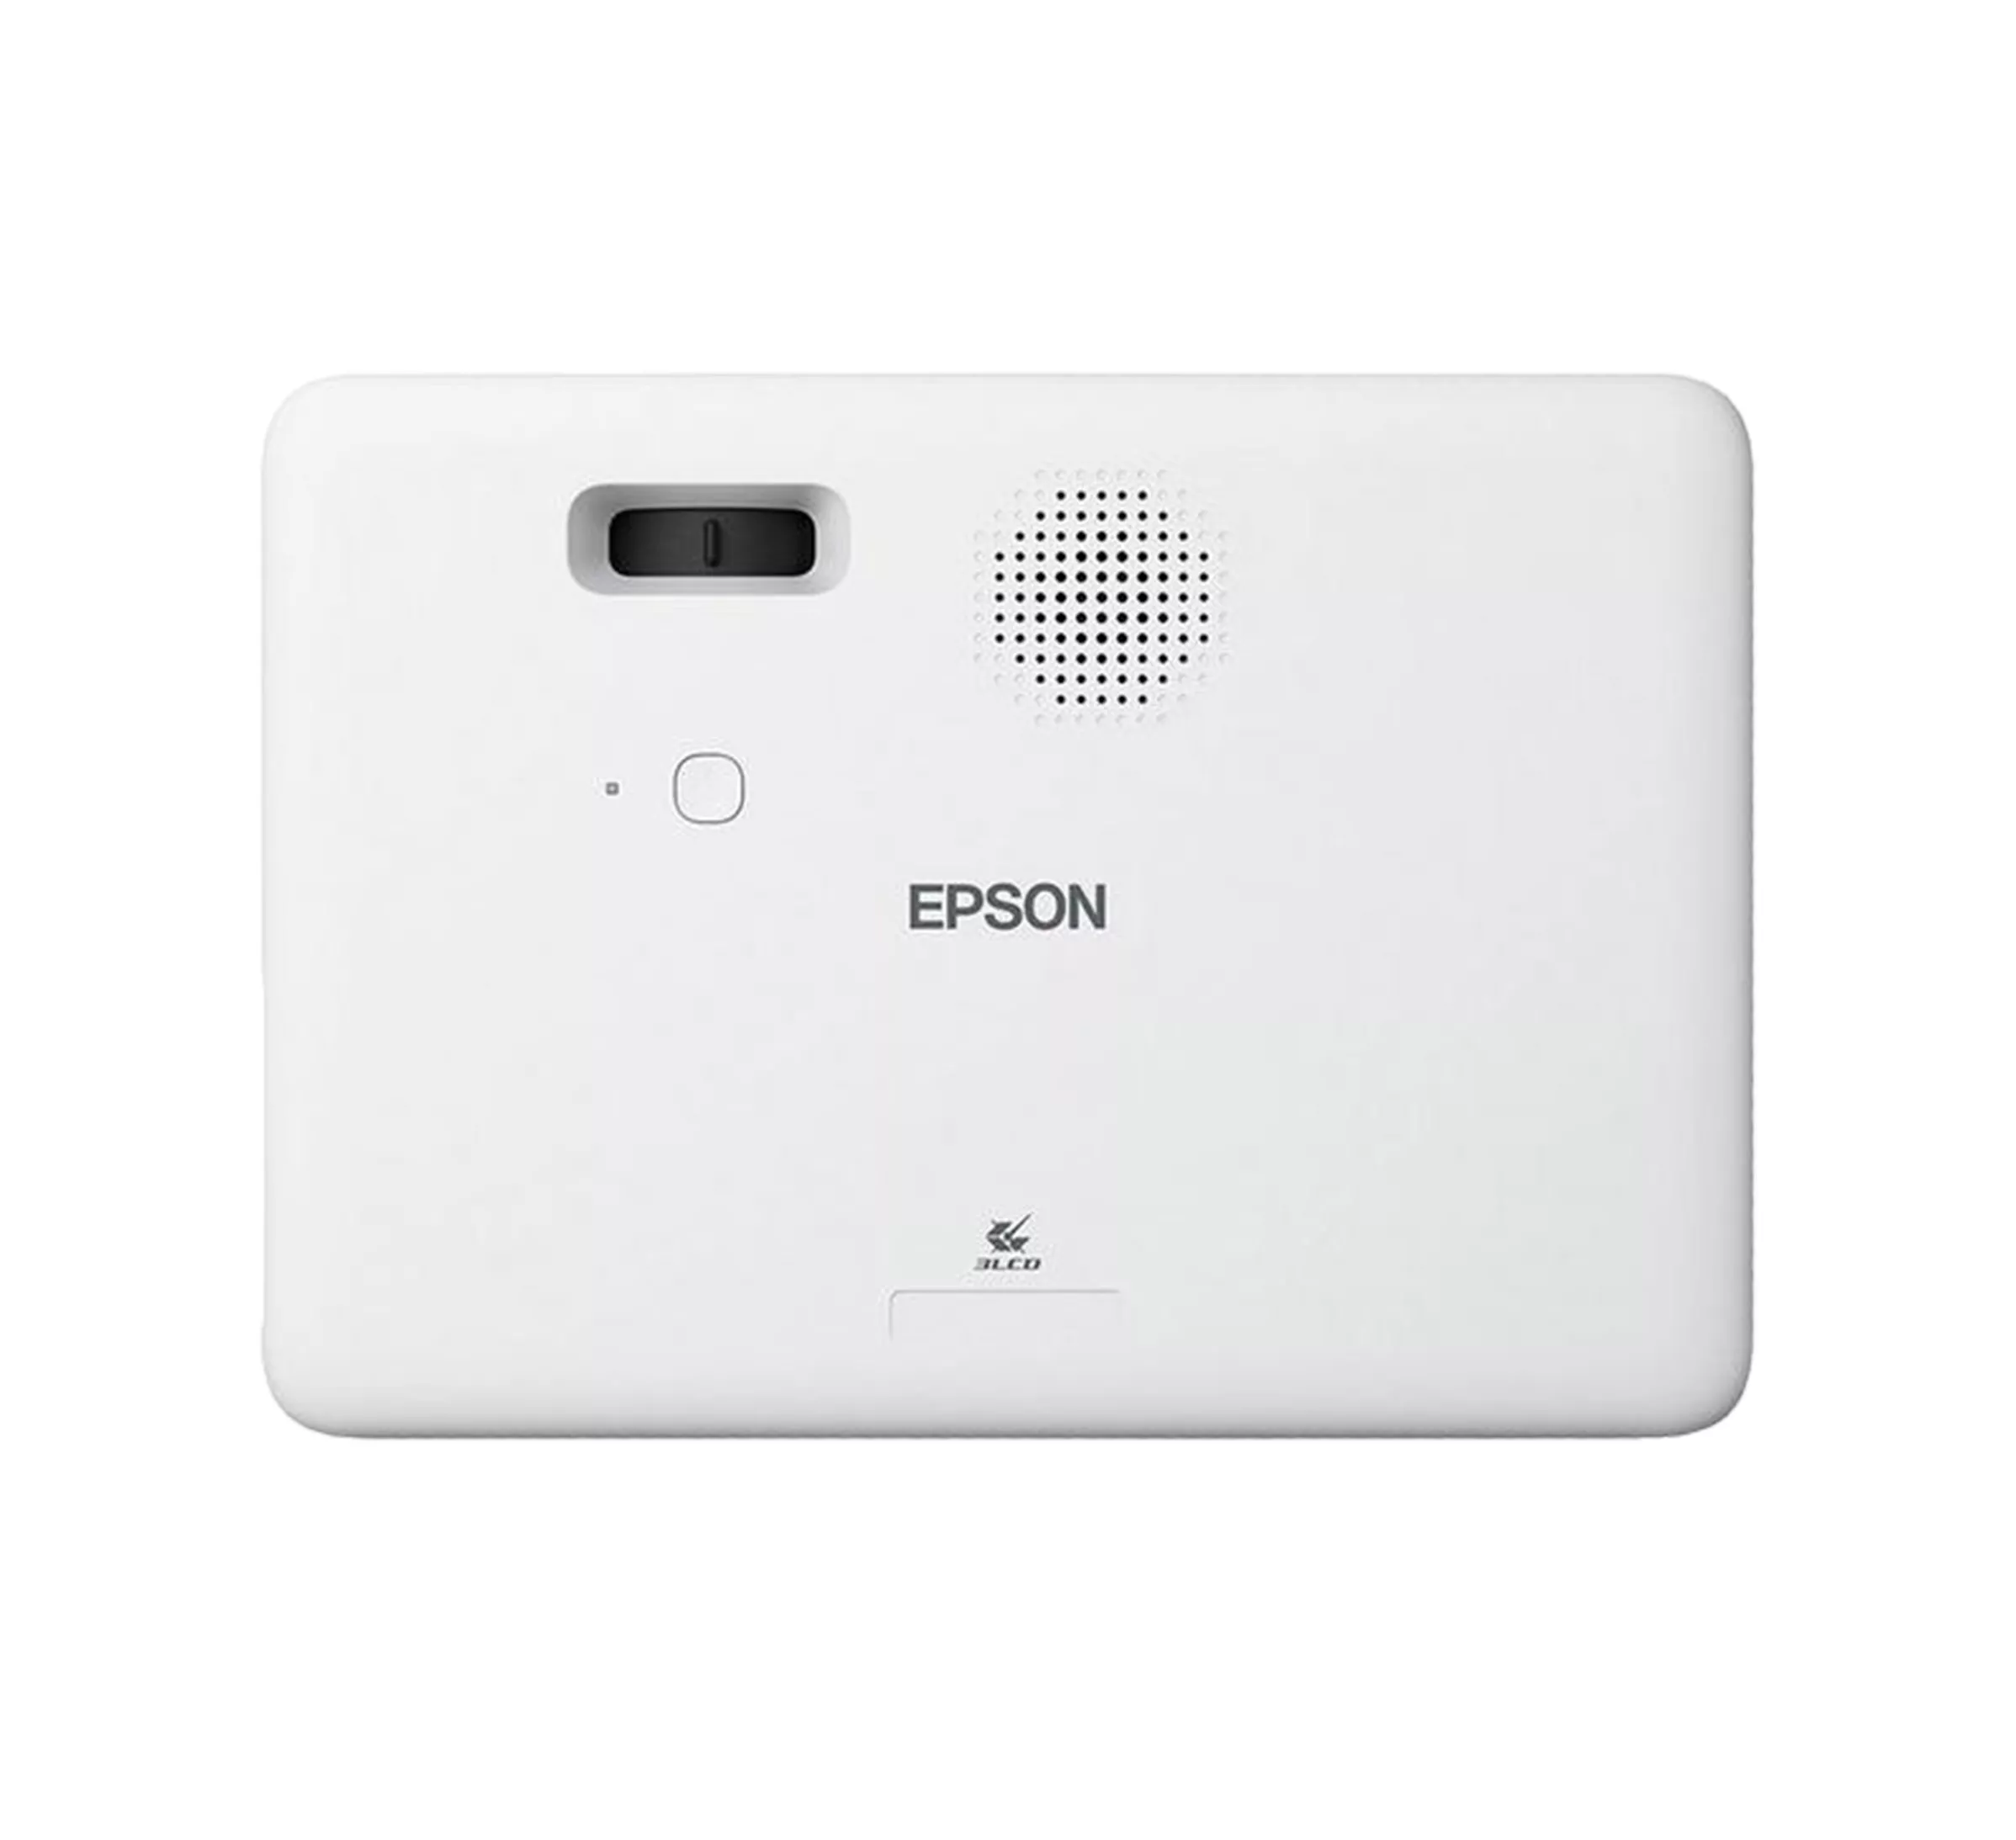 Epson proyector multimedia co-w01 3000 lum diseño compacto